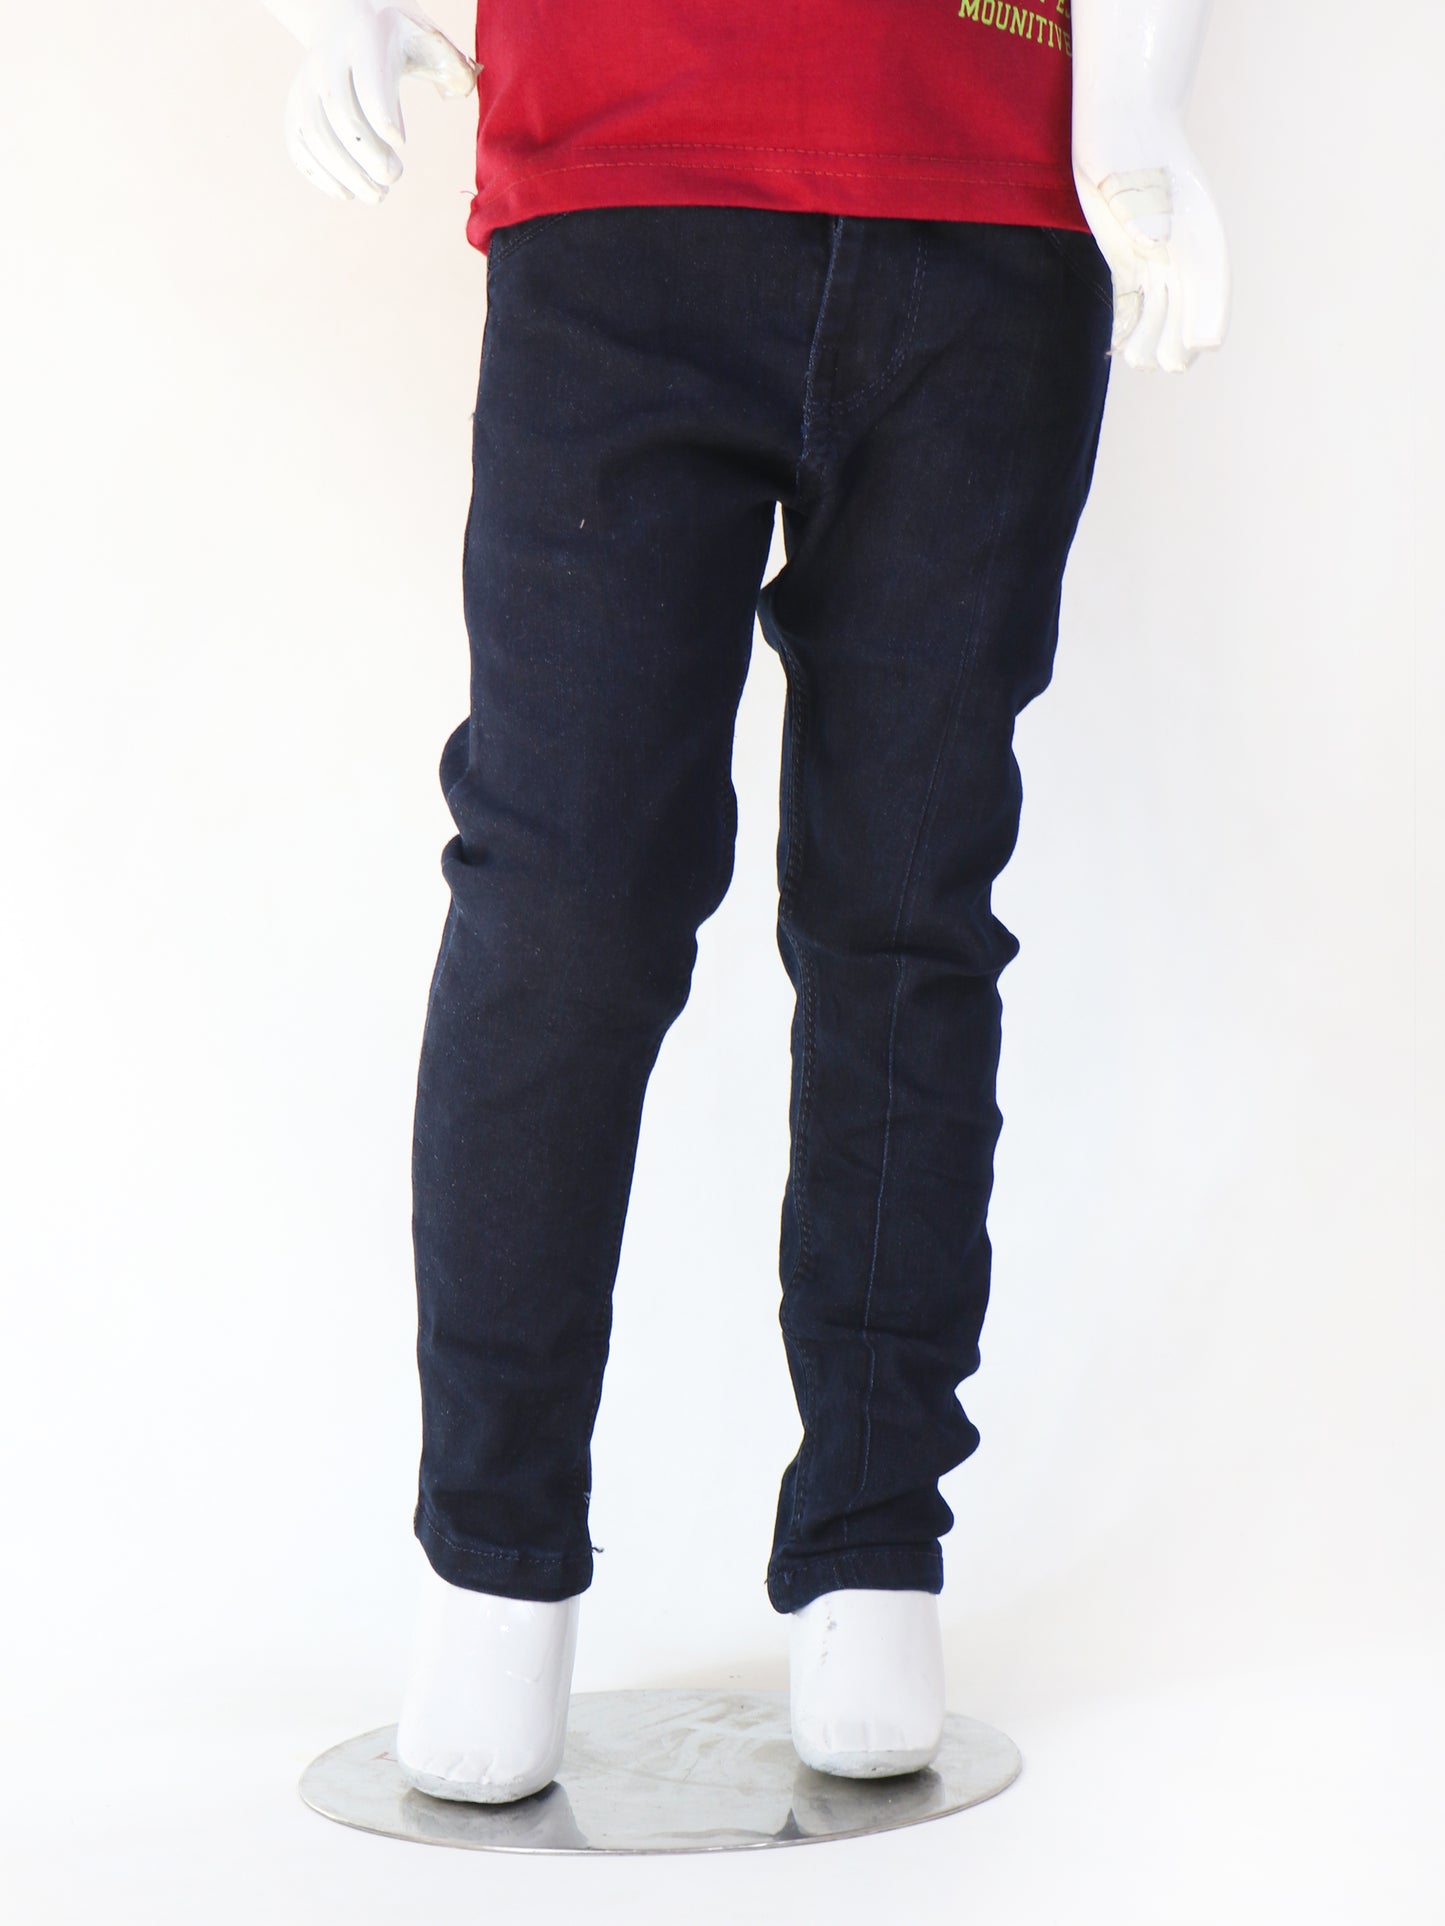 Boys Stretchable Denim Jeans 5Yrs - 13Yrs Black